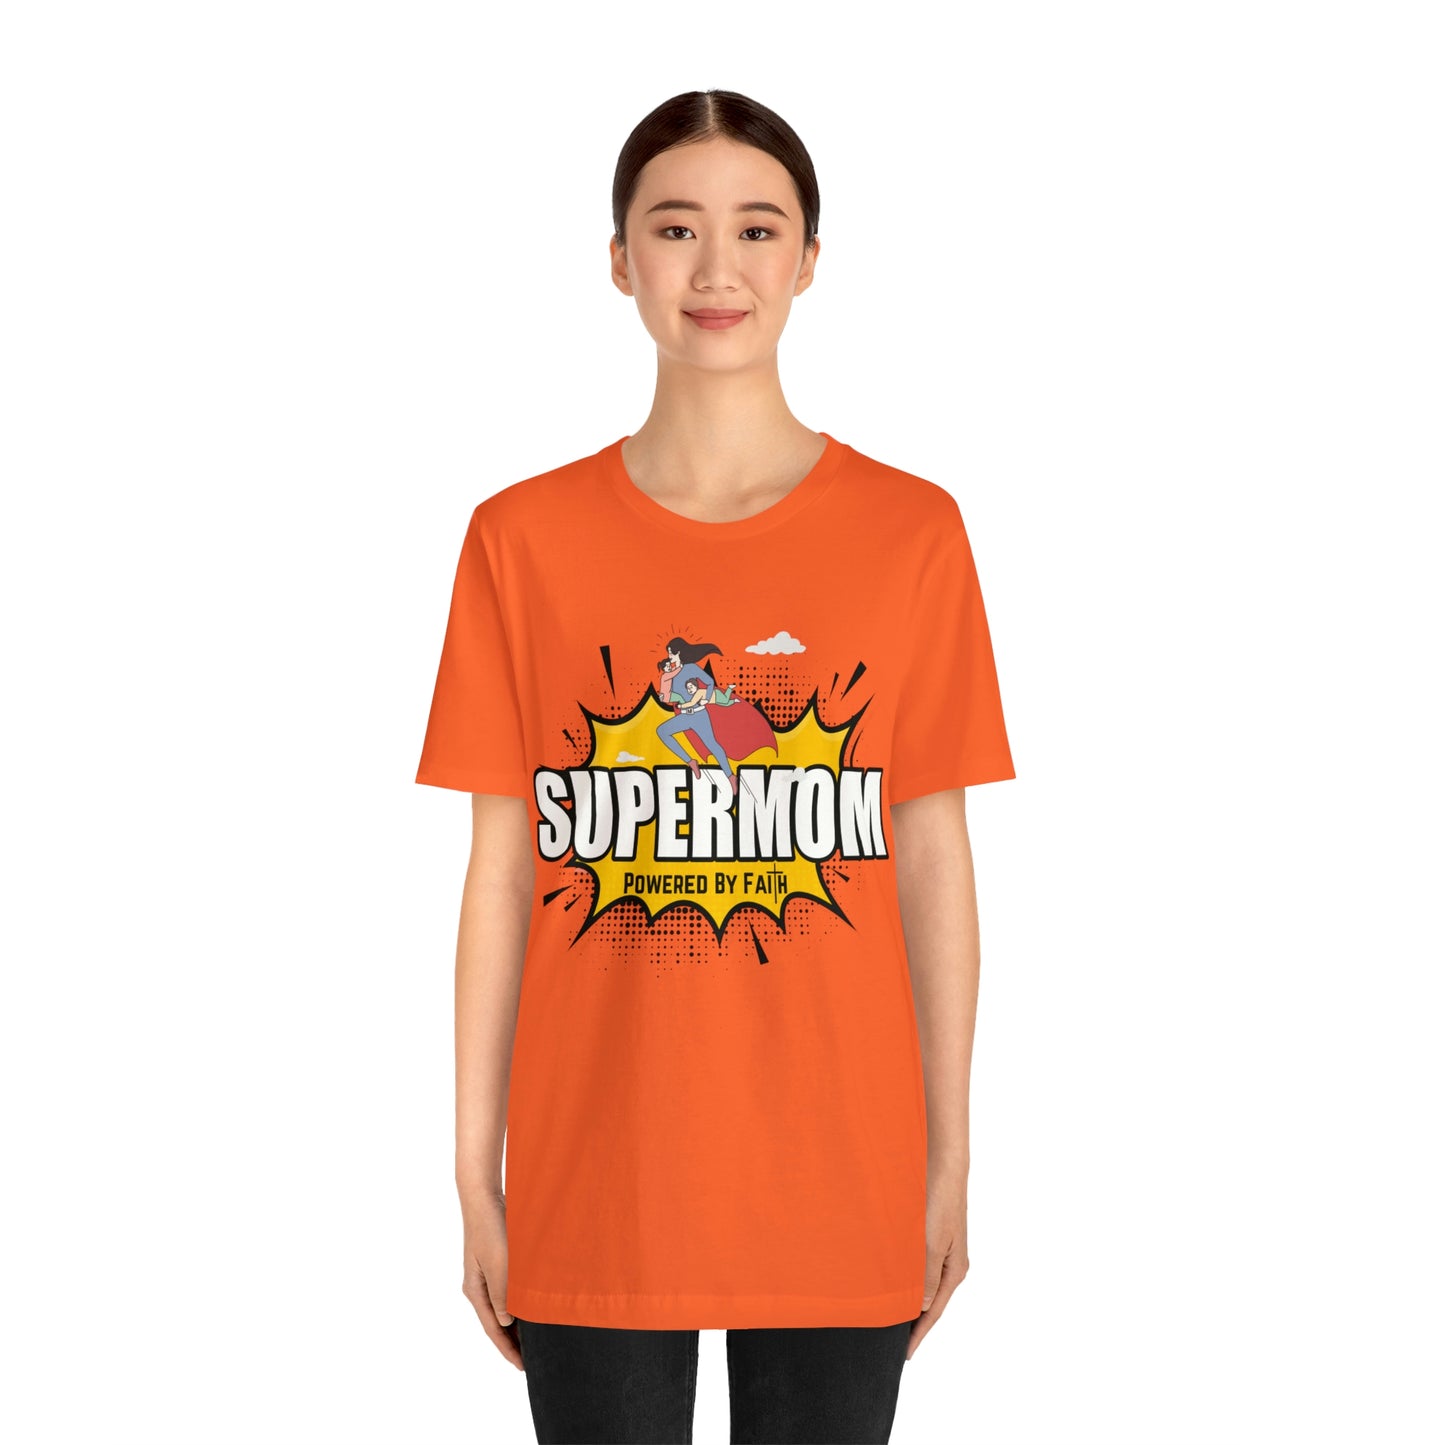 SUPERMOM I Powered By Faith - Jersey Short Sleeve Tee